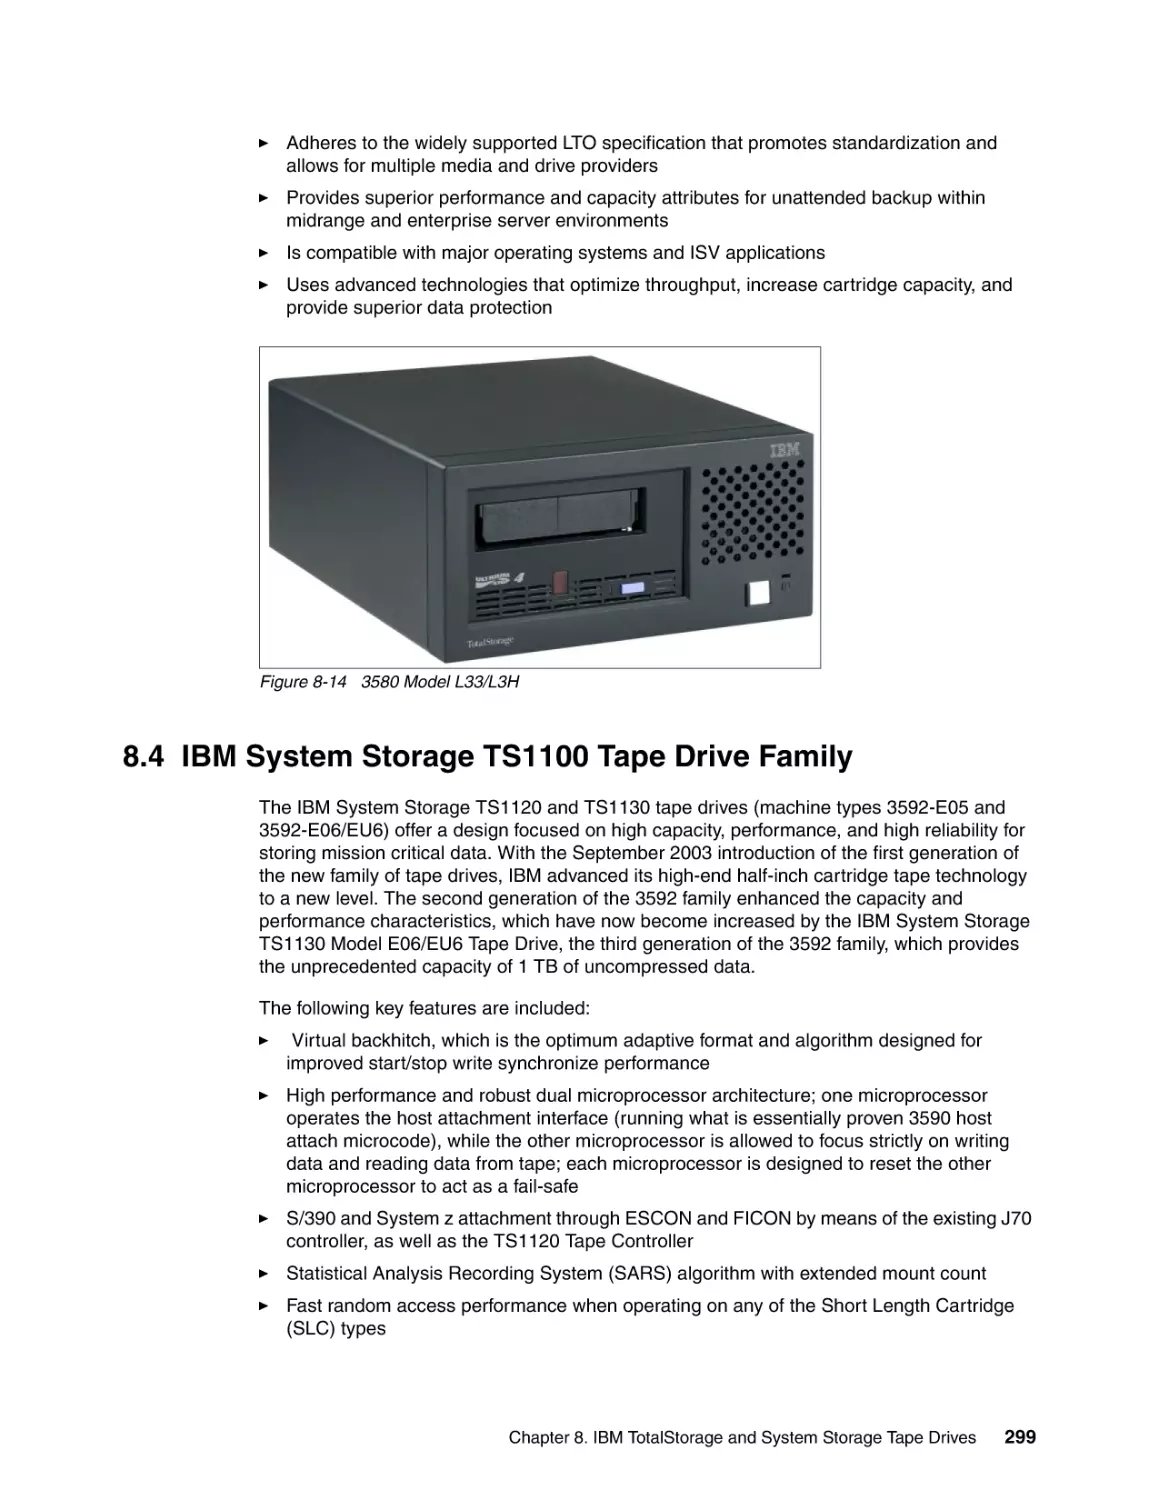 8.4 IBM System Storage TS1100 Tape Drive Family